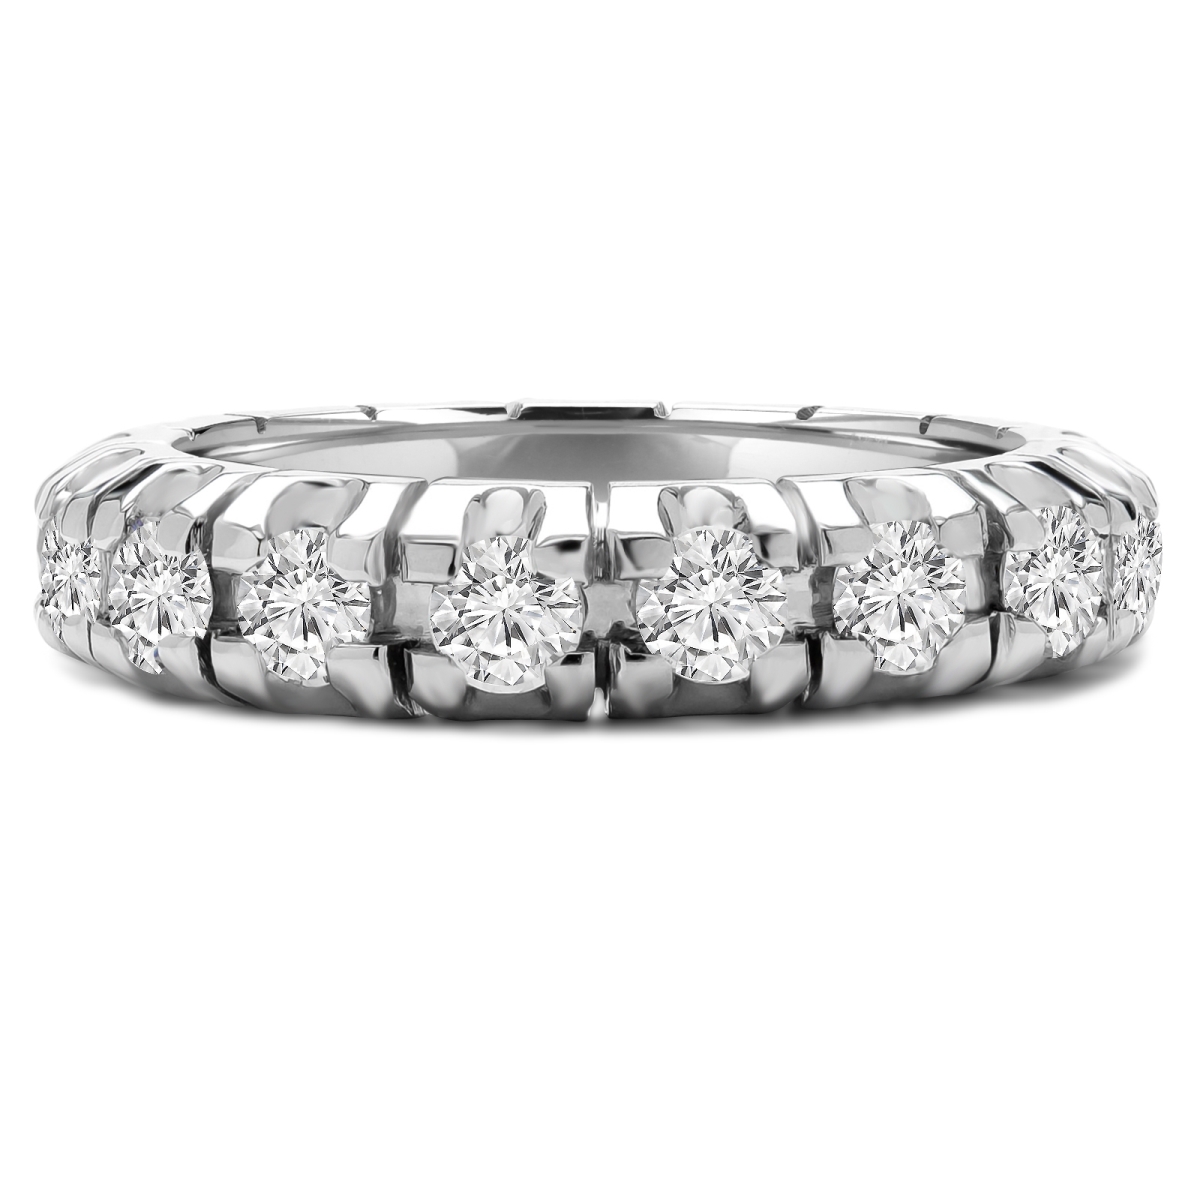 Majesty Diamonds MD210319-6 3.33 CTW Round Diamond Full-Eternity Anniversary Wedding Band Ring in 18K White Gold - Size 6